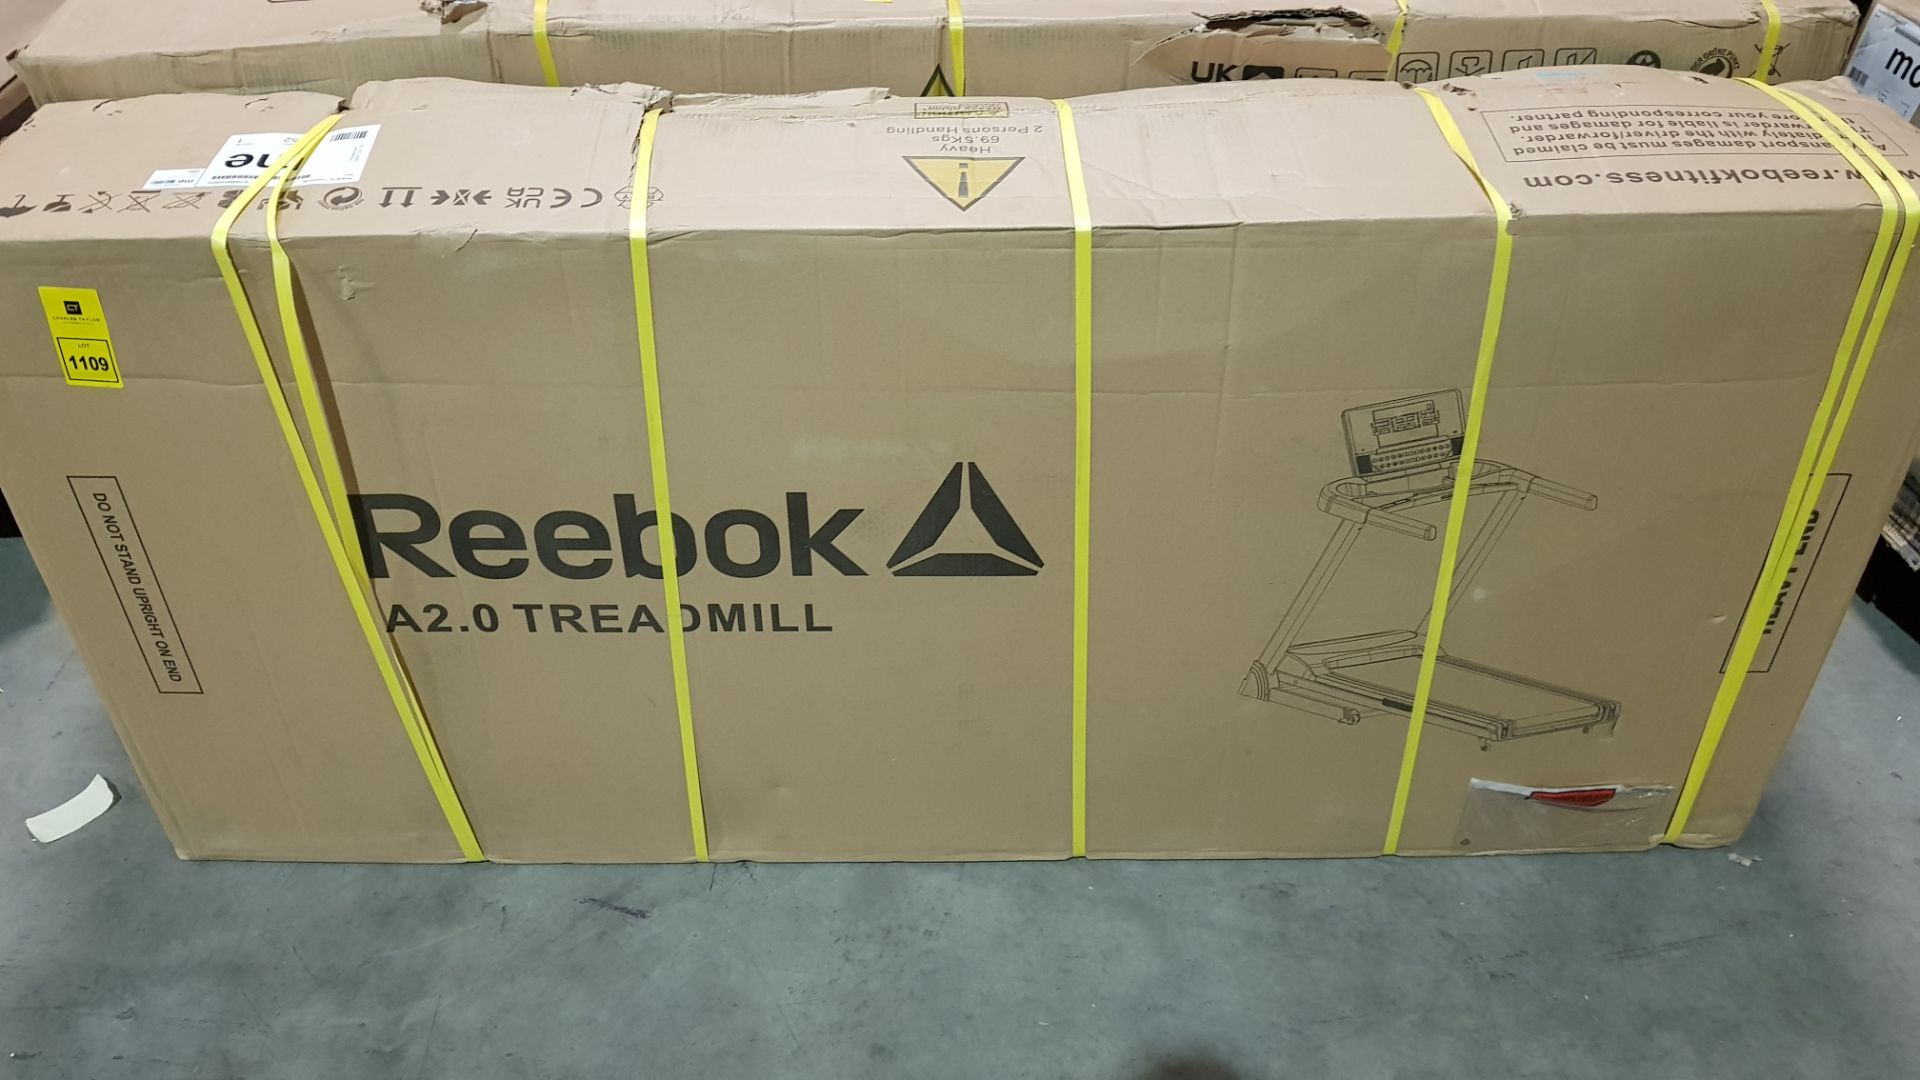 1 X BOXED REEBOK A2.0 TREADMILL IN SILVER - IN 1 BOX ( PLEASE NOTE MINOR STRAP DAMAGE ON BOX ) - Image 2 of 2